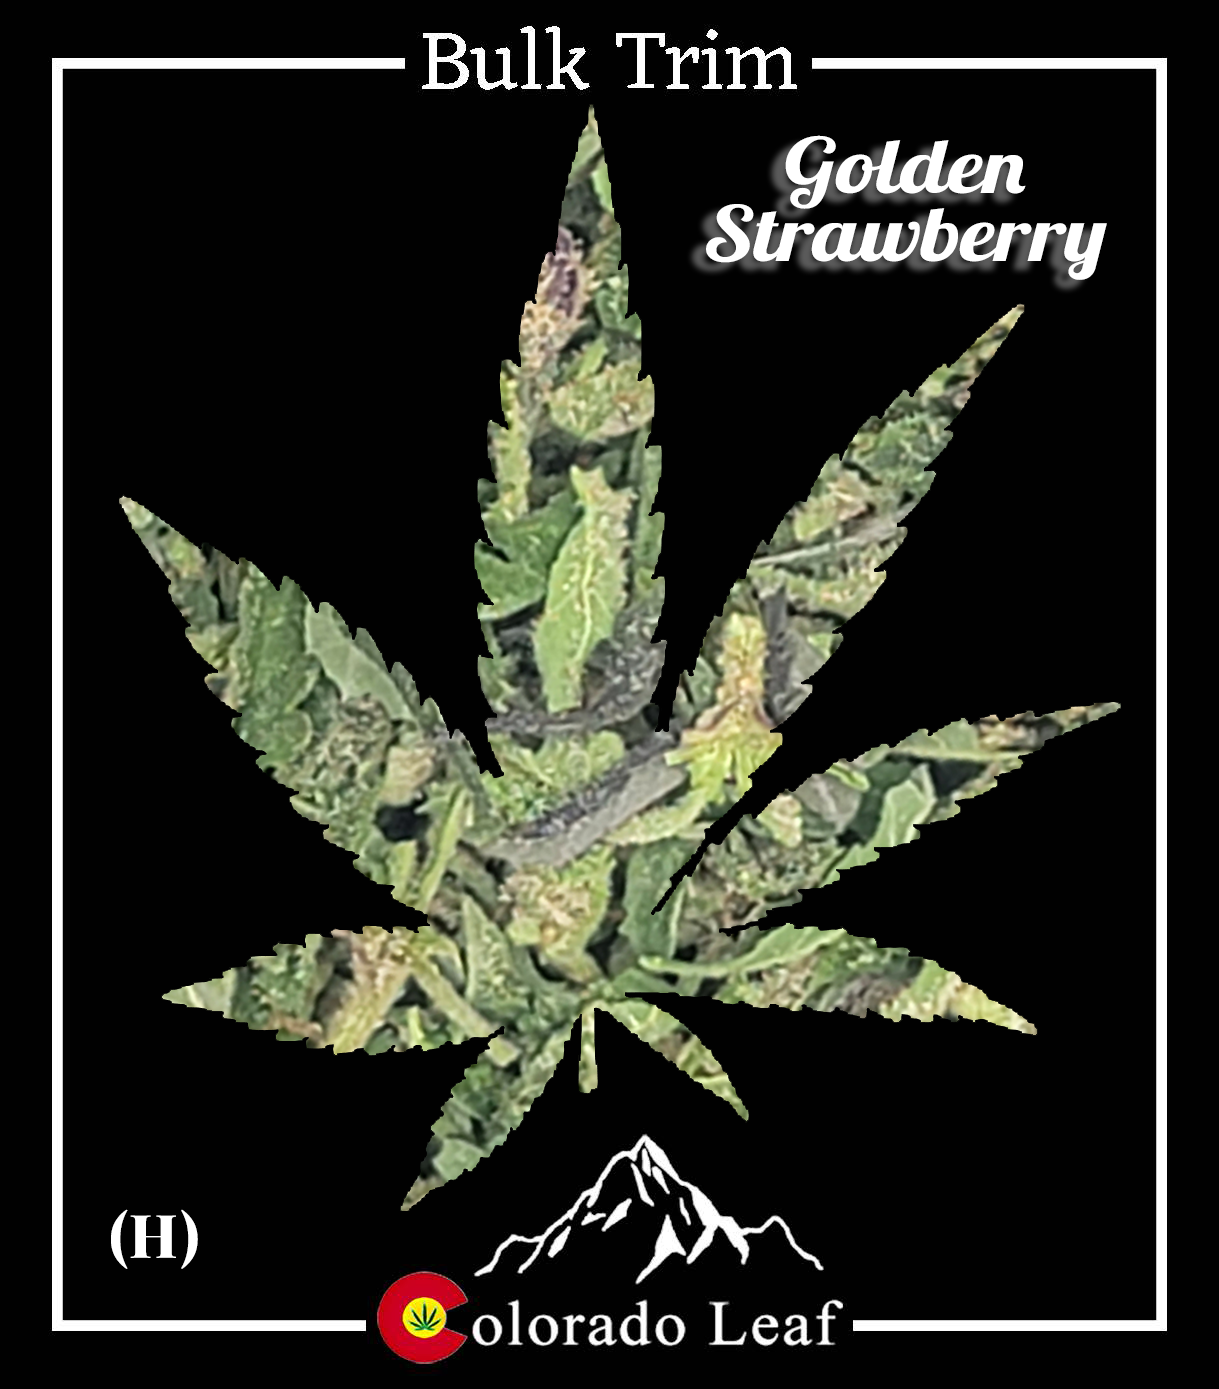 Golden Strawberry